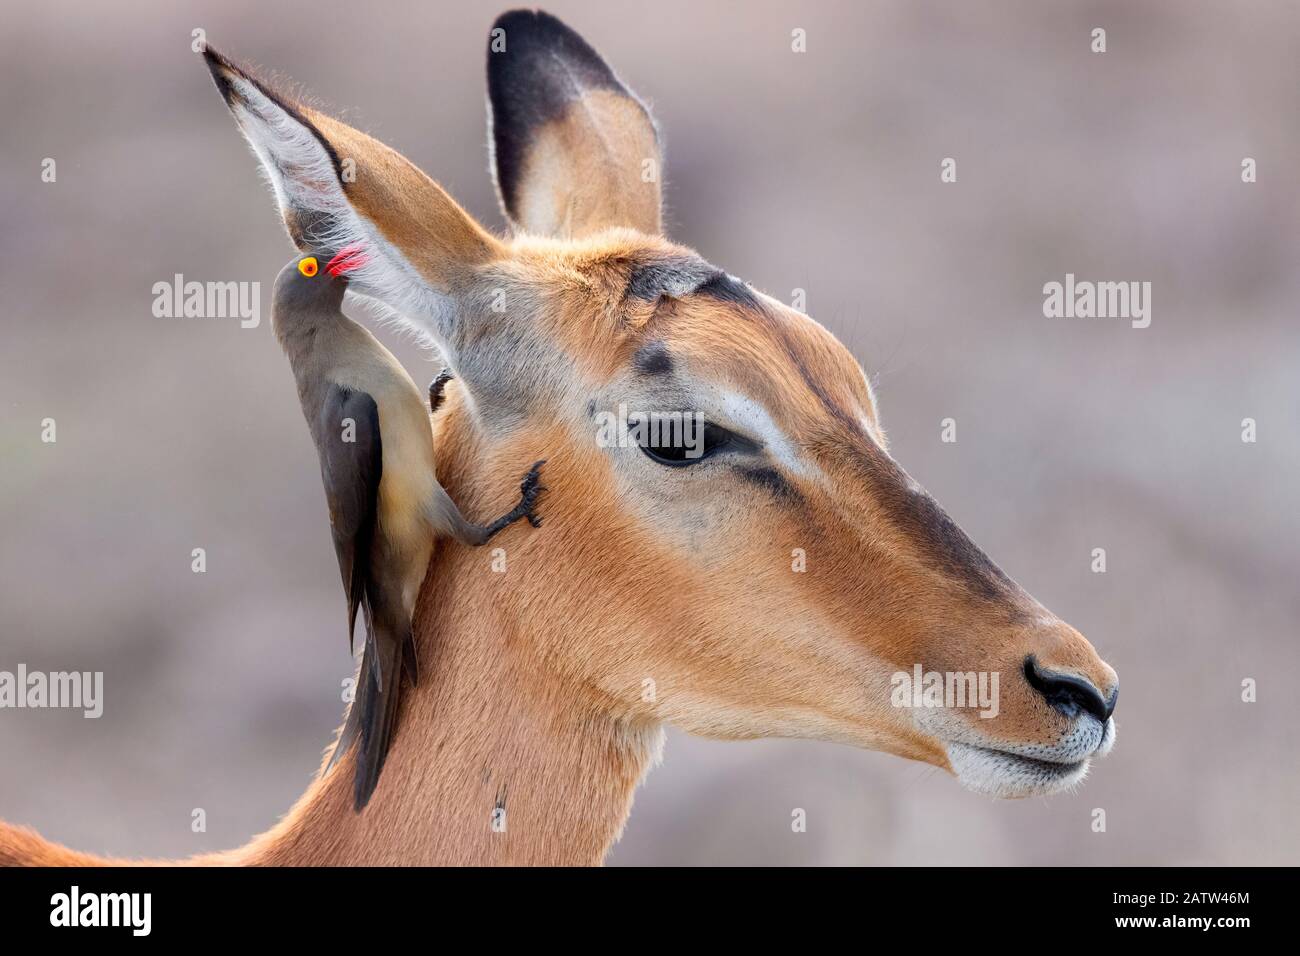 Roter Oxpecker (Buphagus erythrorynchus), der nach Parasiten im Ohr eines Impala (Aepyceros melampus), Mpumalanga, Südafrika sucht Stockfoto